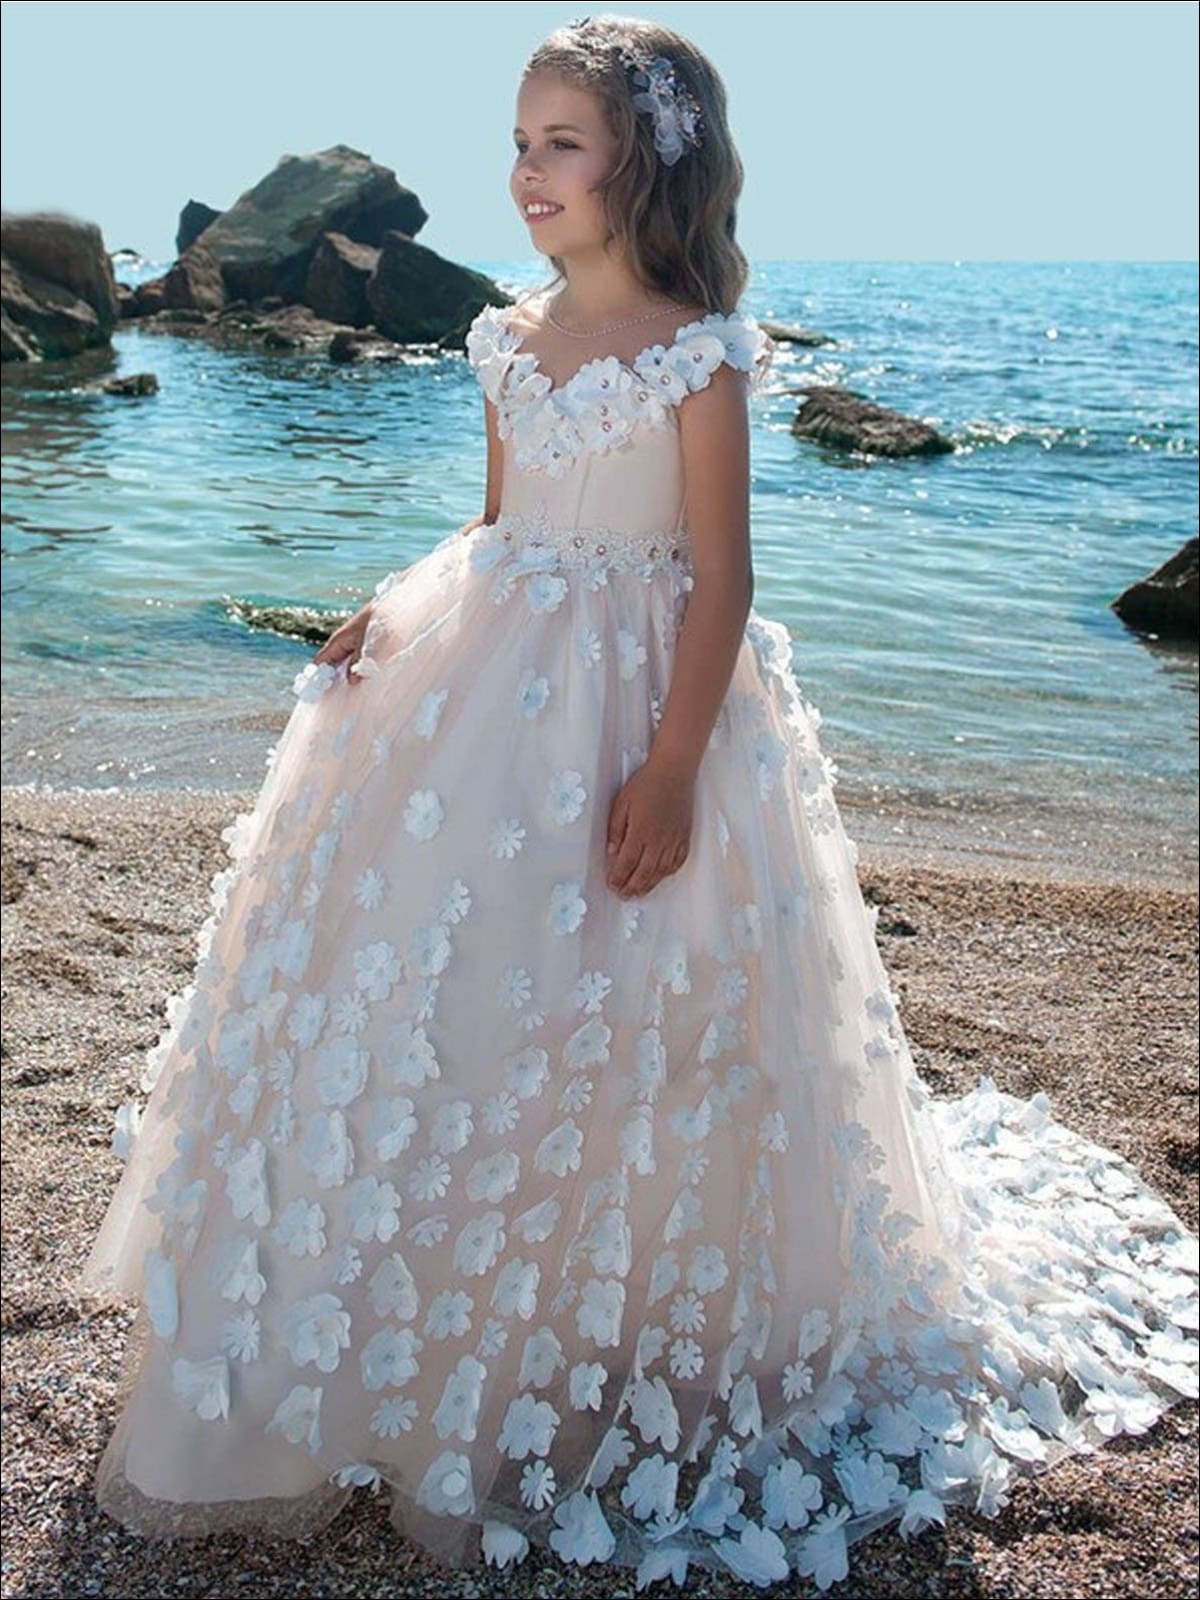 Toddler Spring Party Dresses | Girls Flower Embellished Princess Gown